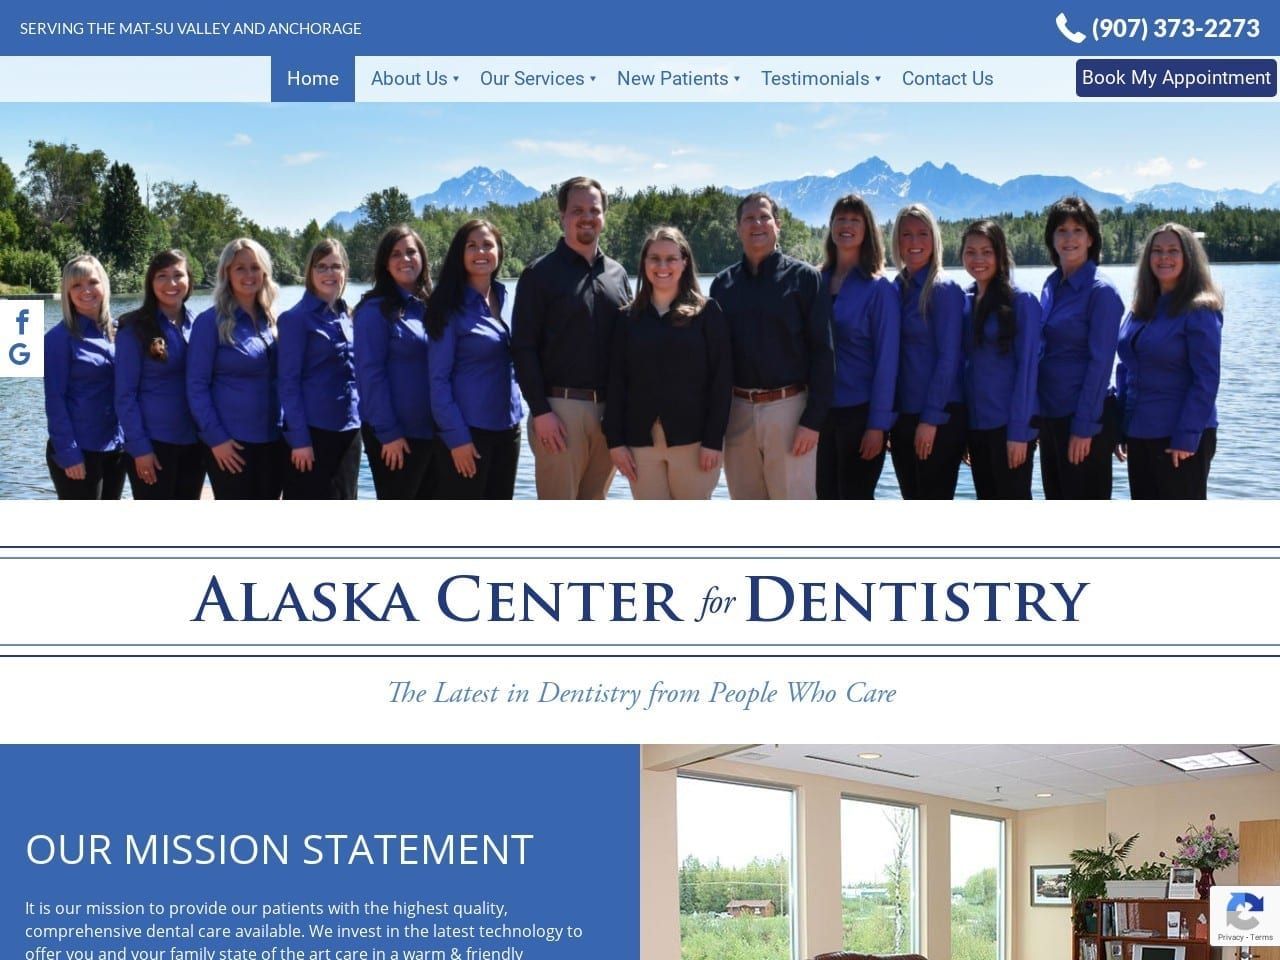 Alaska Center For Dentist Website Screenshot from alaskacenterfordentistry.com